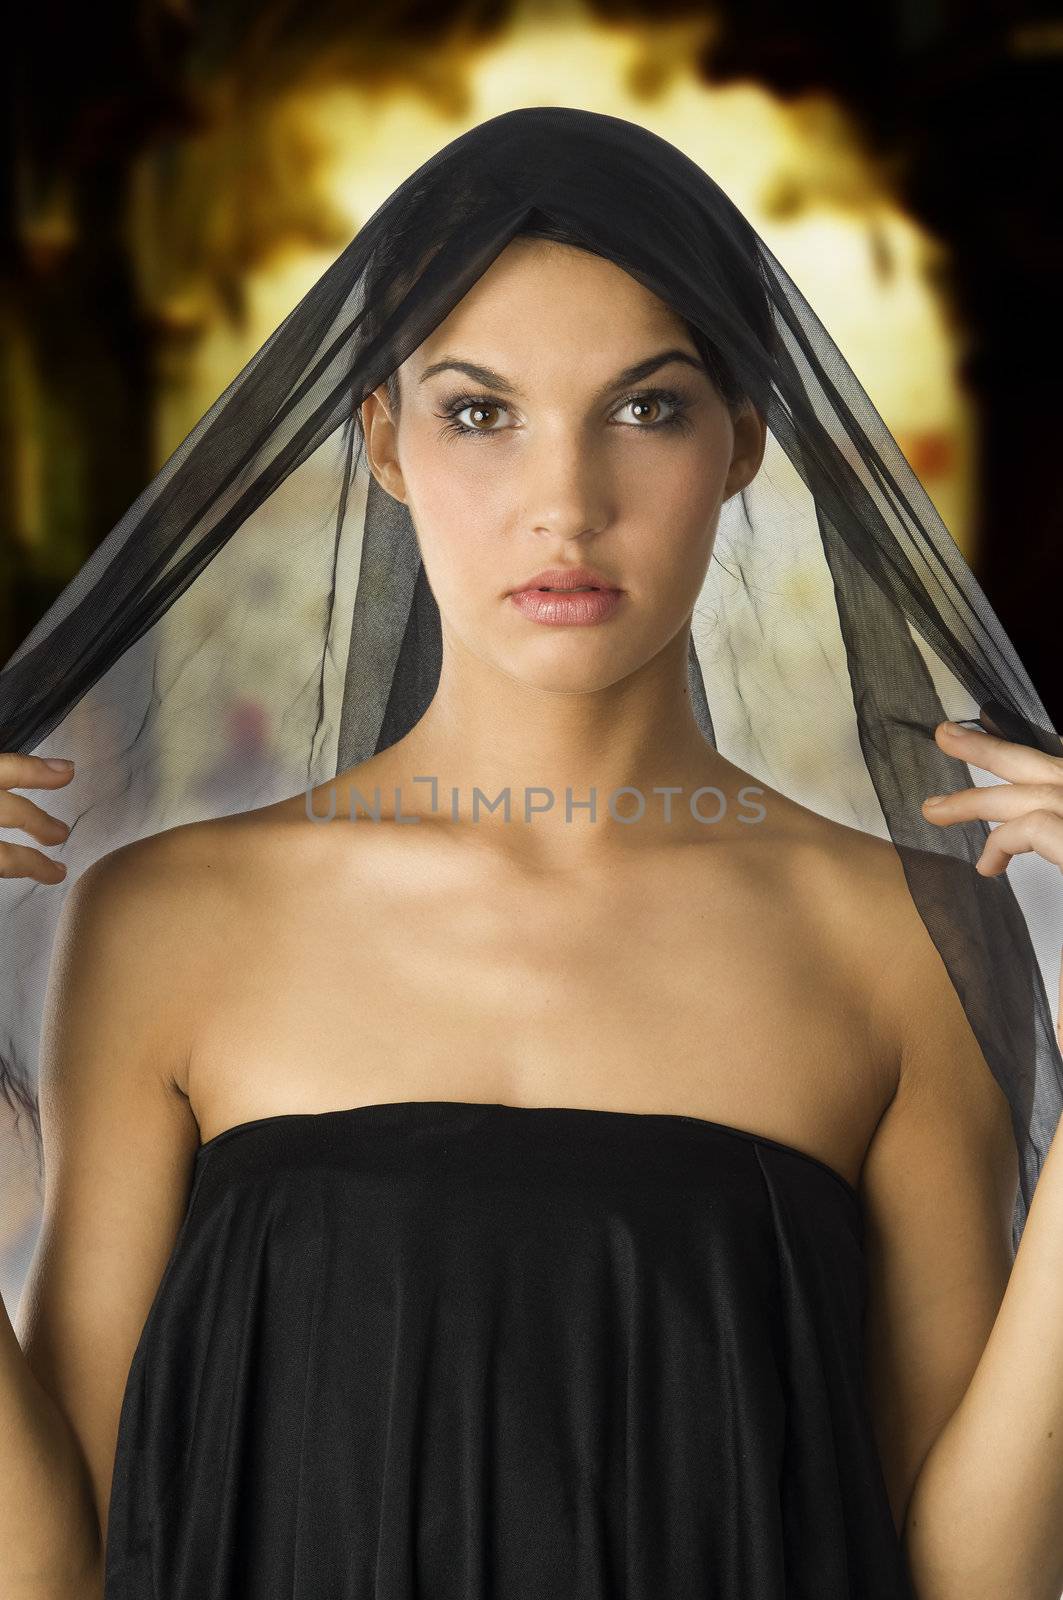 beautiful woman with a black veil on her head like black wife